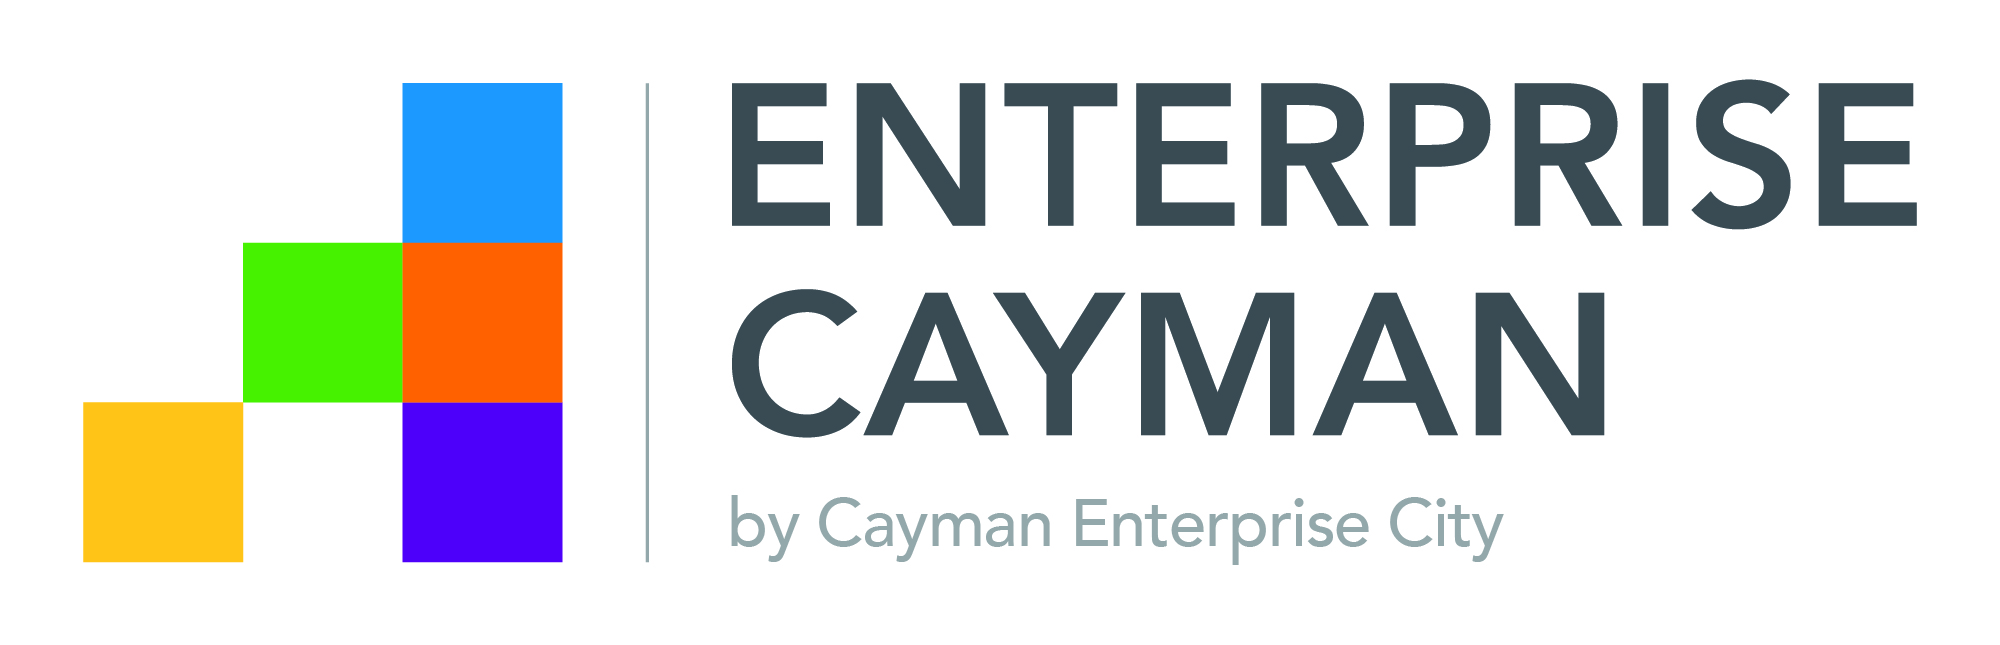 Enterprise Cayman